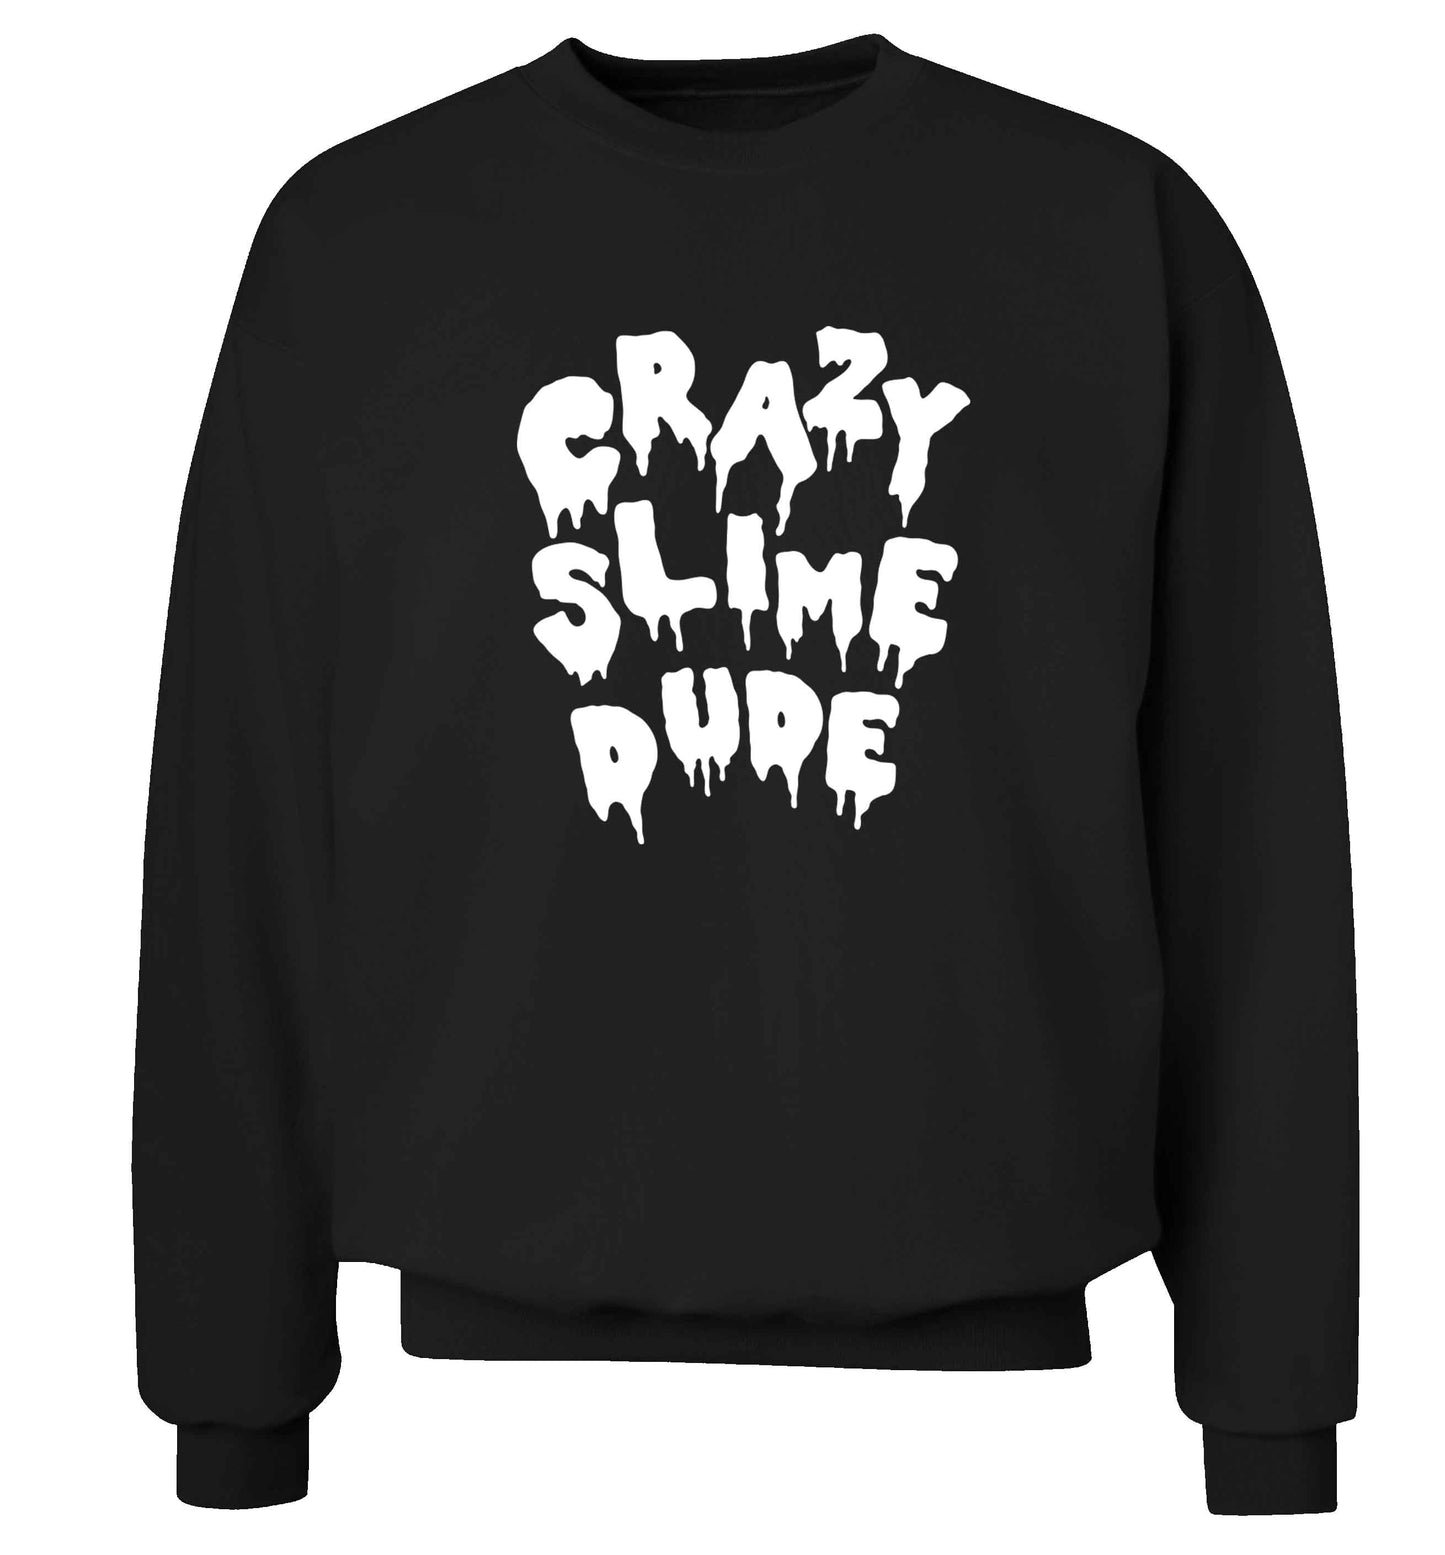 Crazy slime dude adult's unisex black sweater 2XL